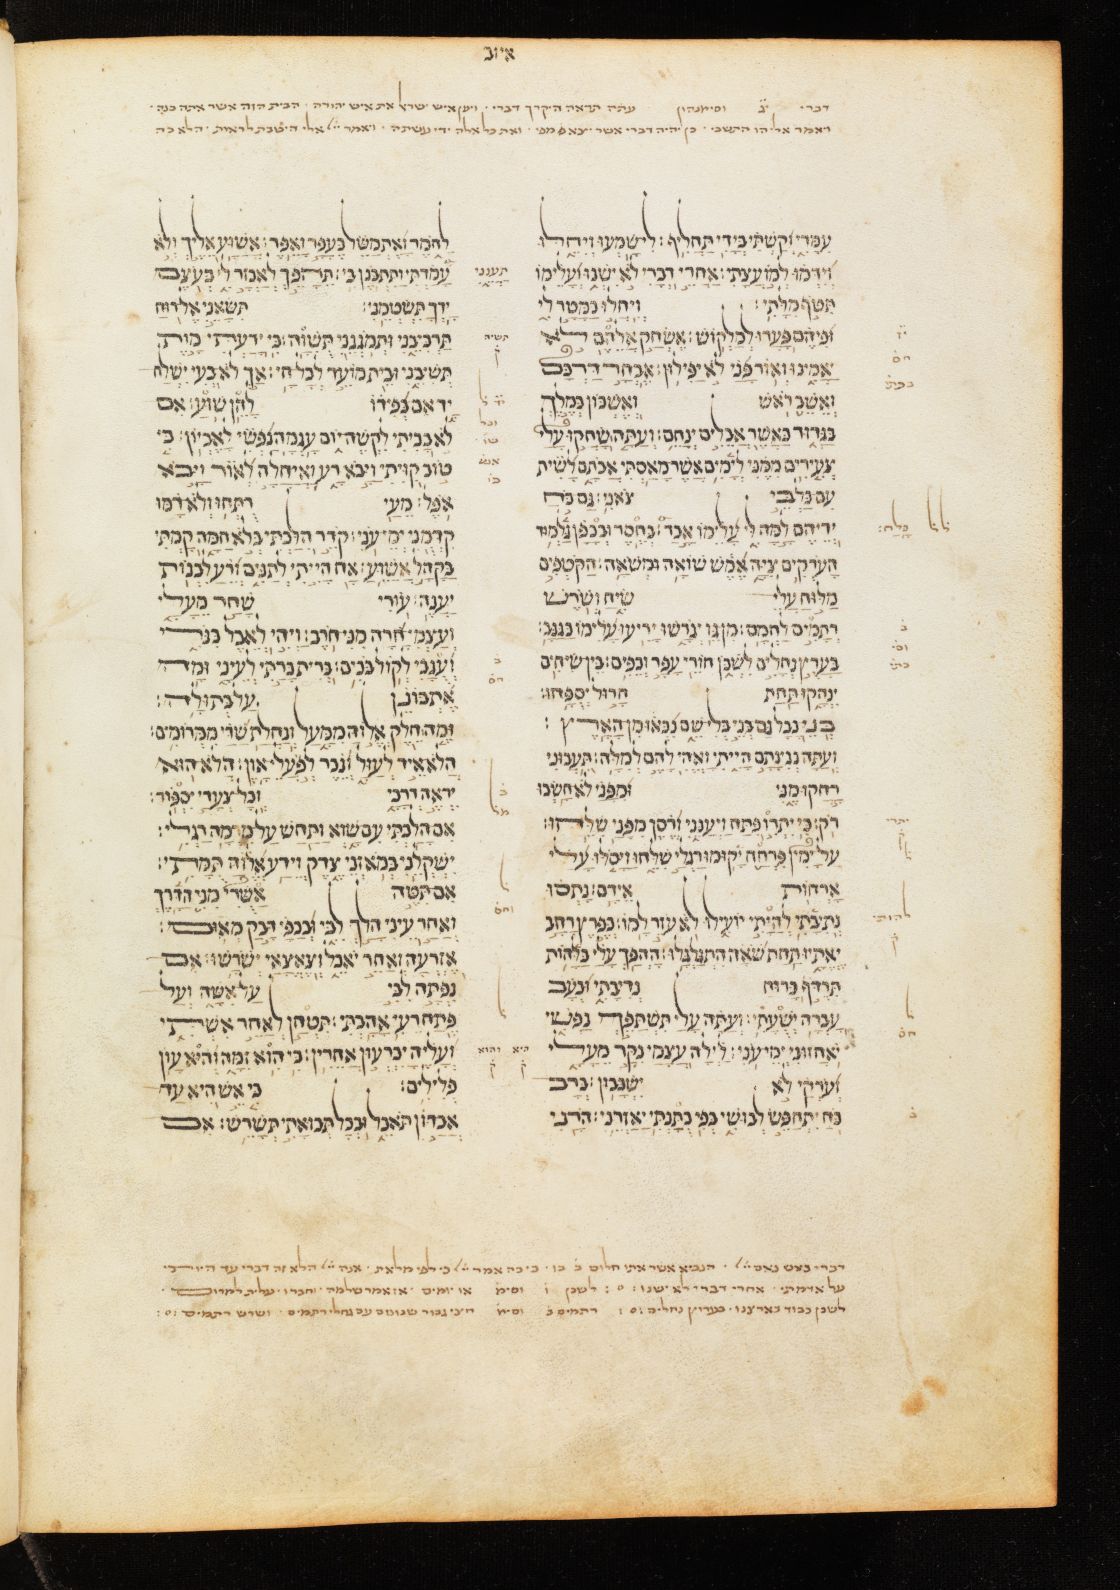 Genève, Bibliothèque de Genève, Ms. heb. 1, f. 375v – Massoretic Bible (Pentateuch, Prophets and Hagiographs)